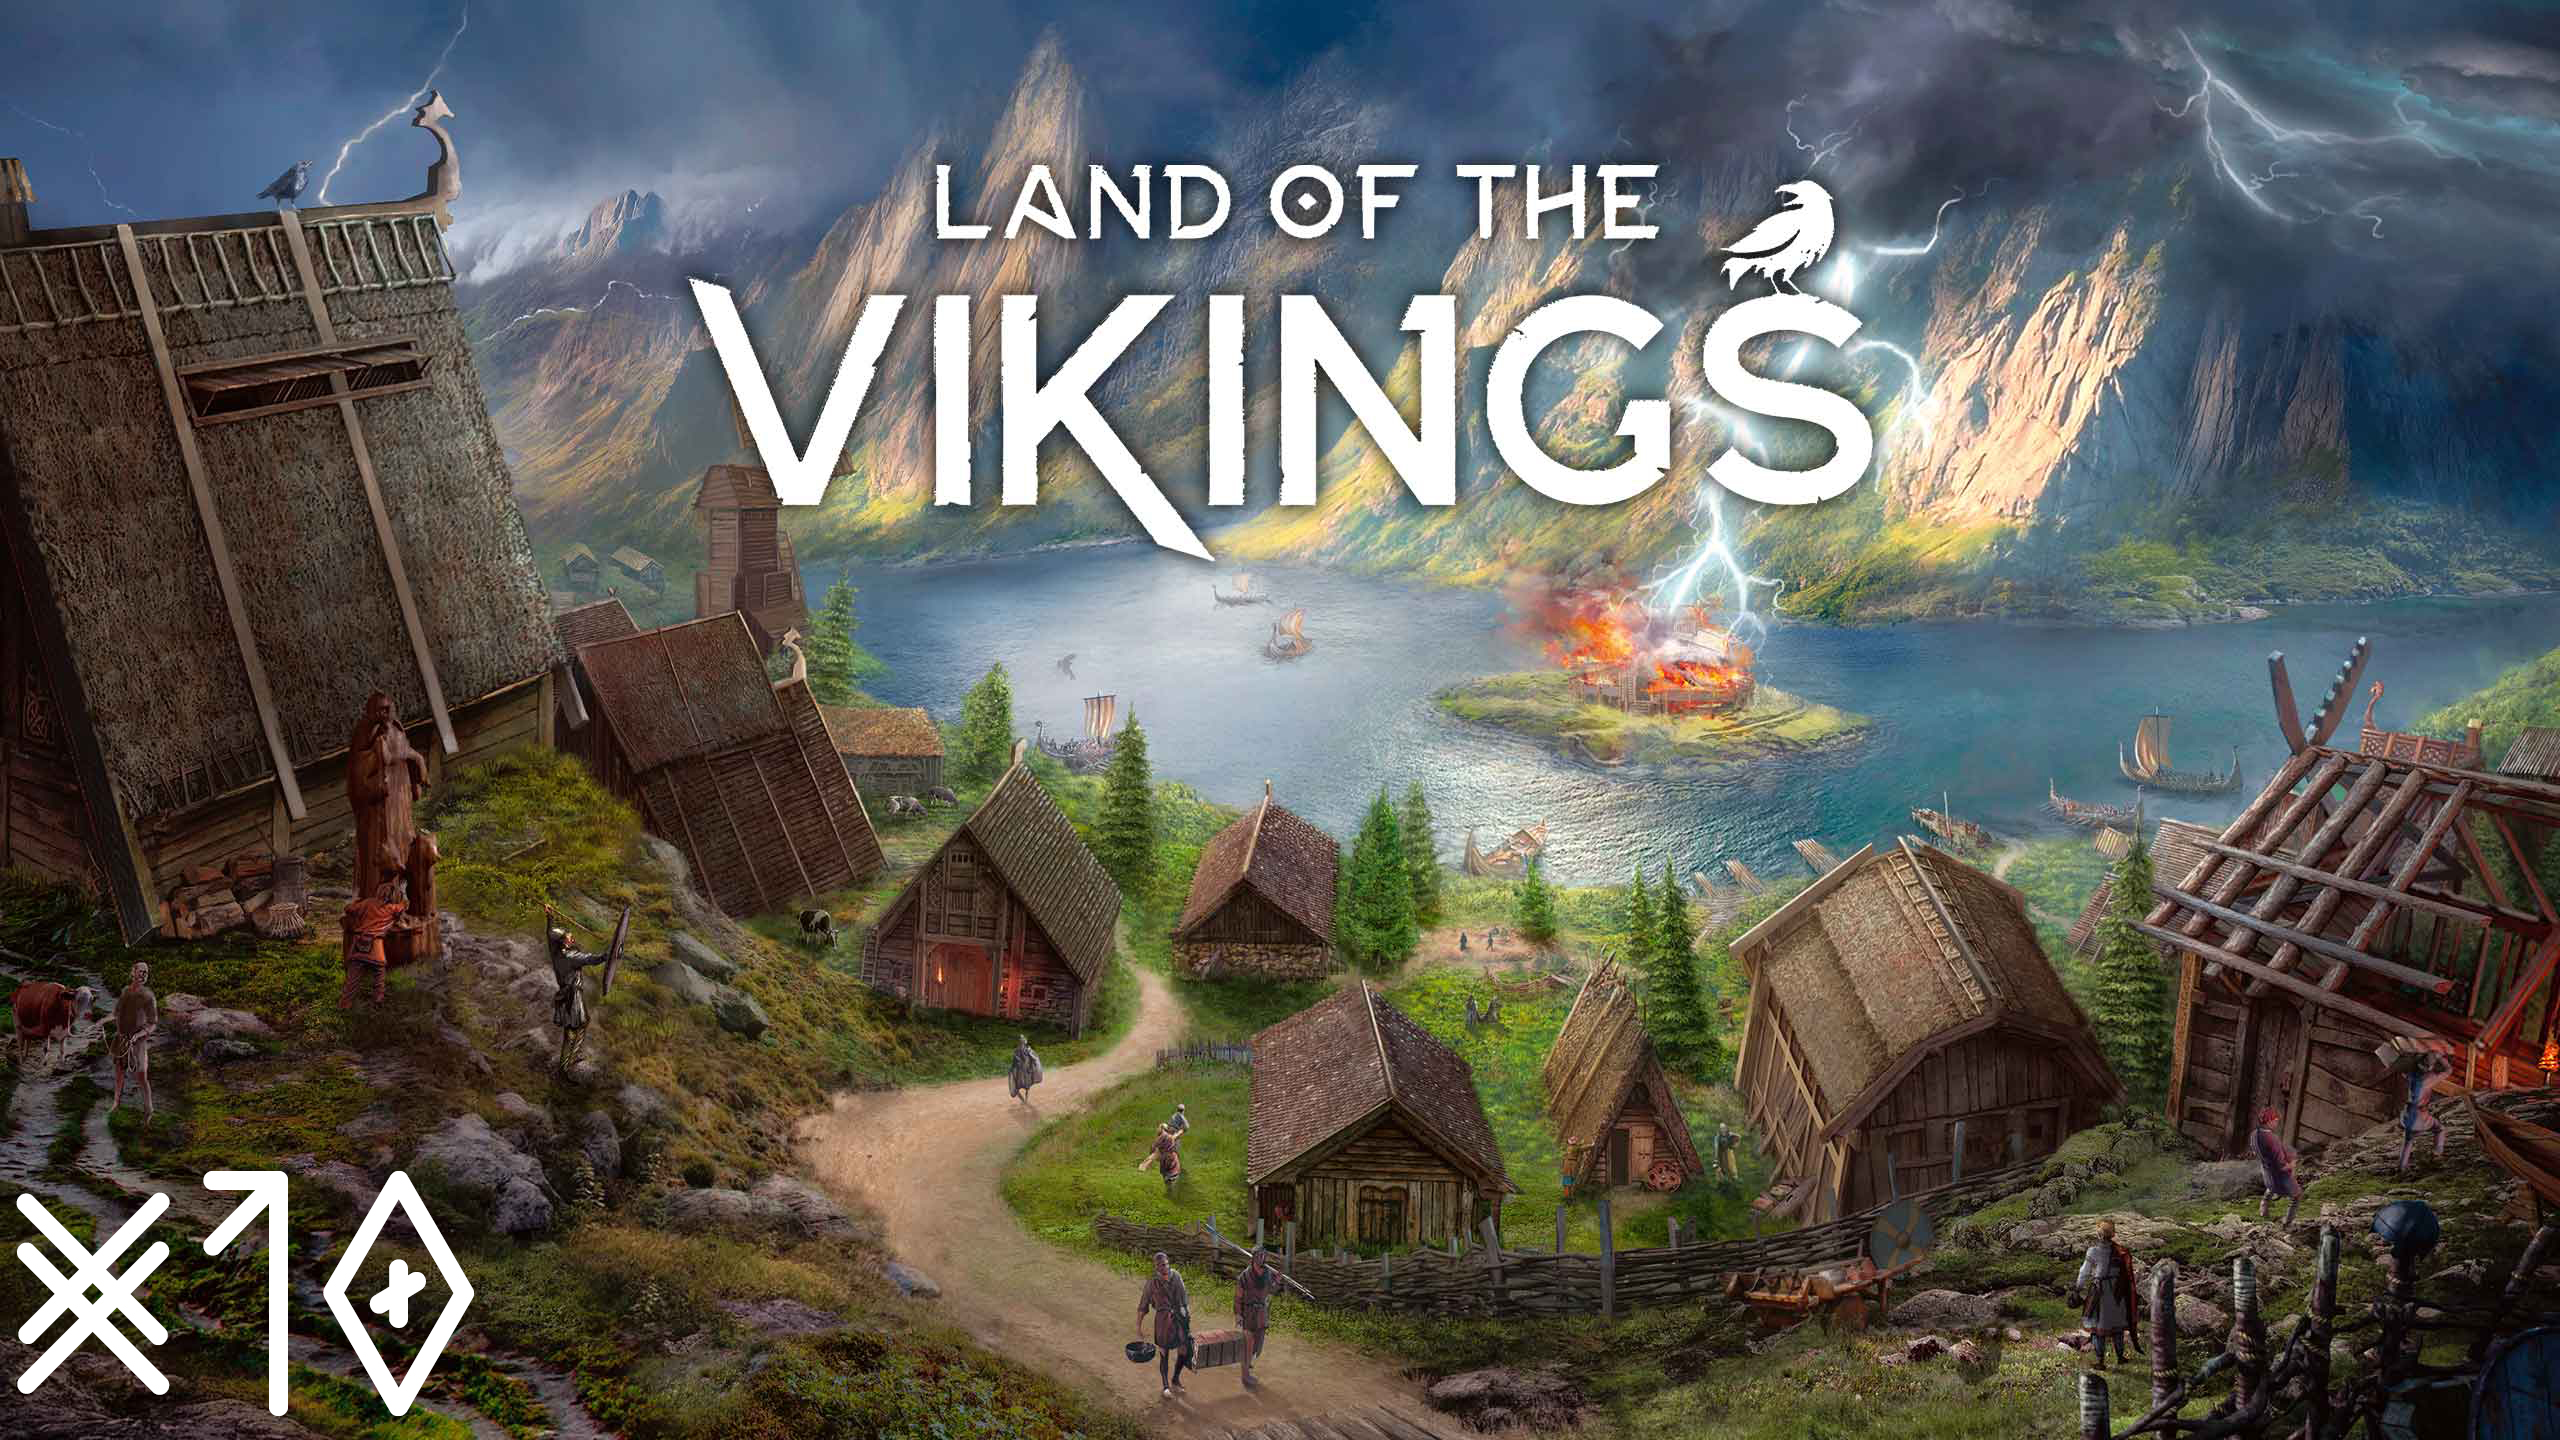 Драккары построены, воины готовы. Выбираем цель для набега! Land of the Vikings #10